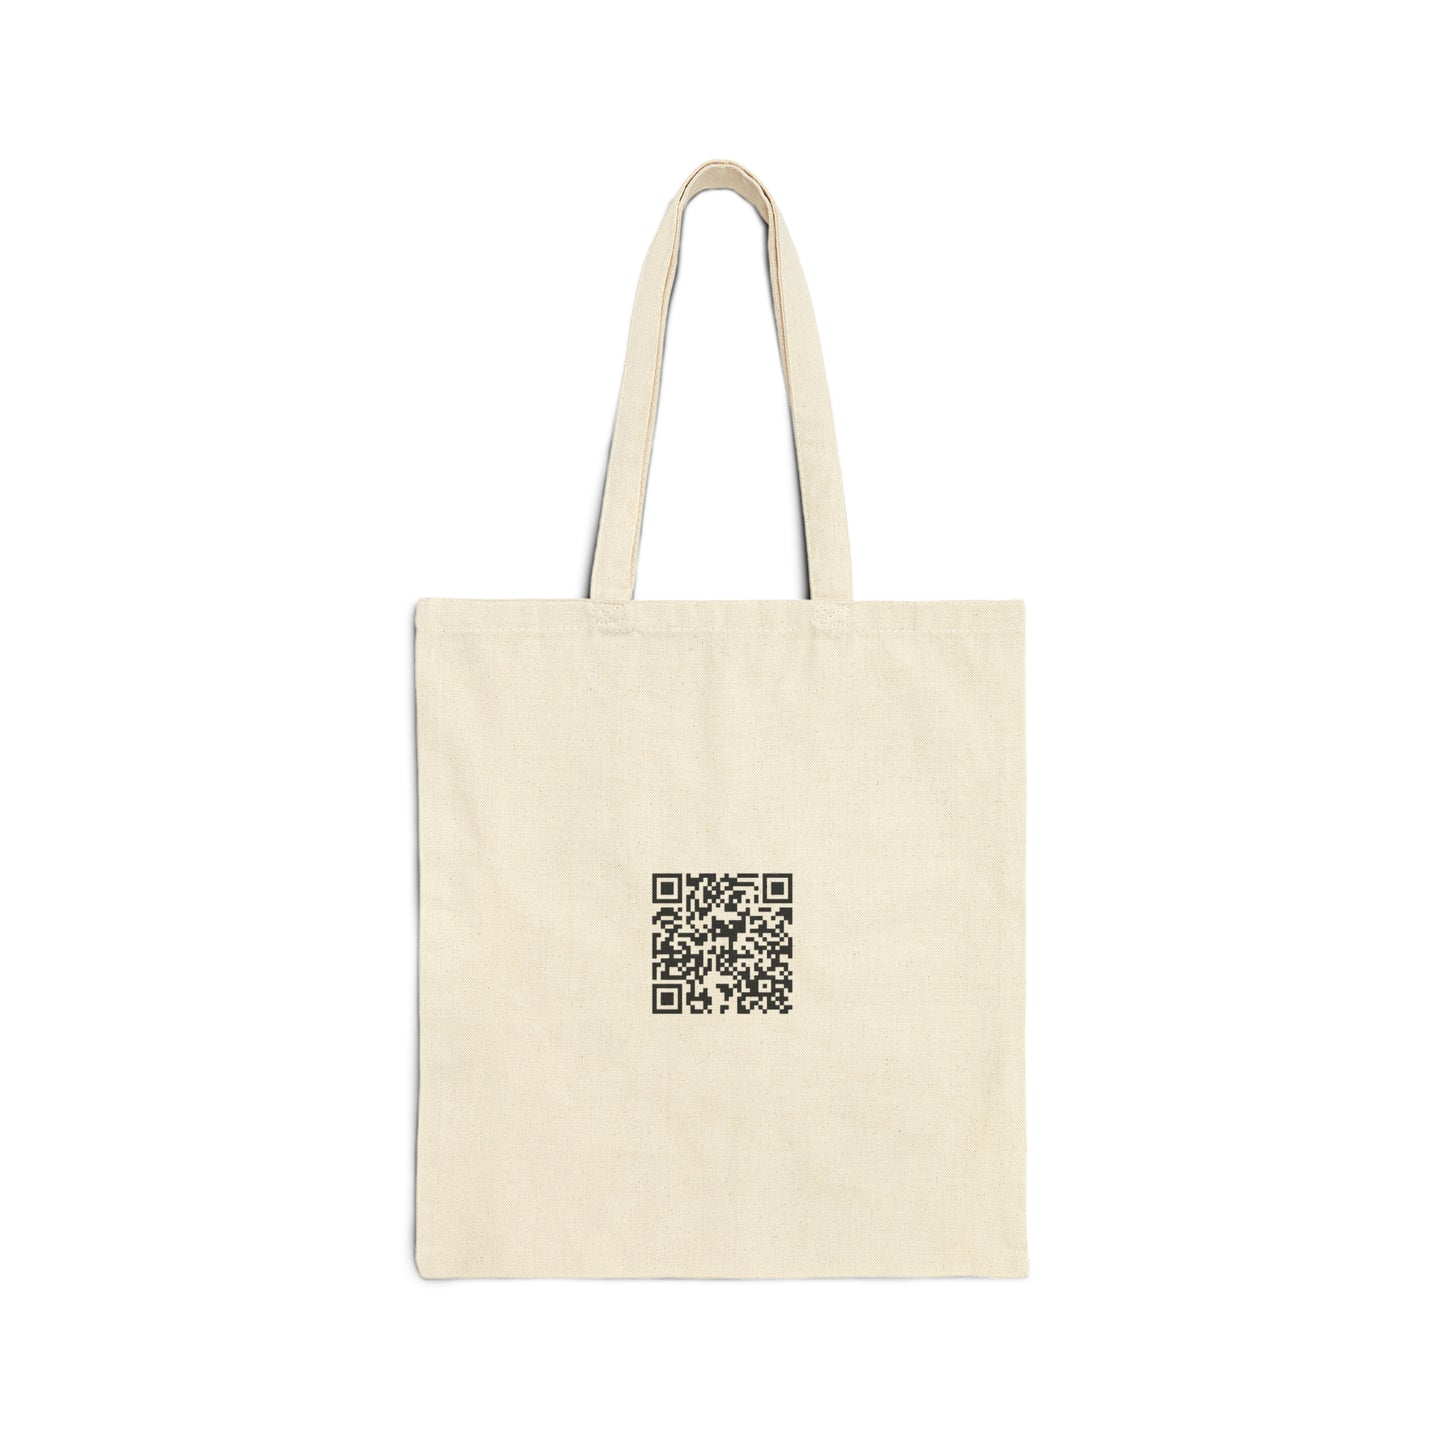 2156 - Cotton Canvas Tote Bag